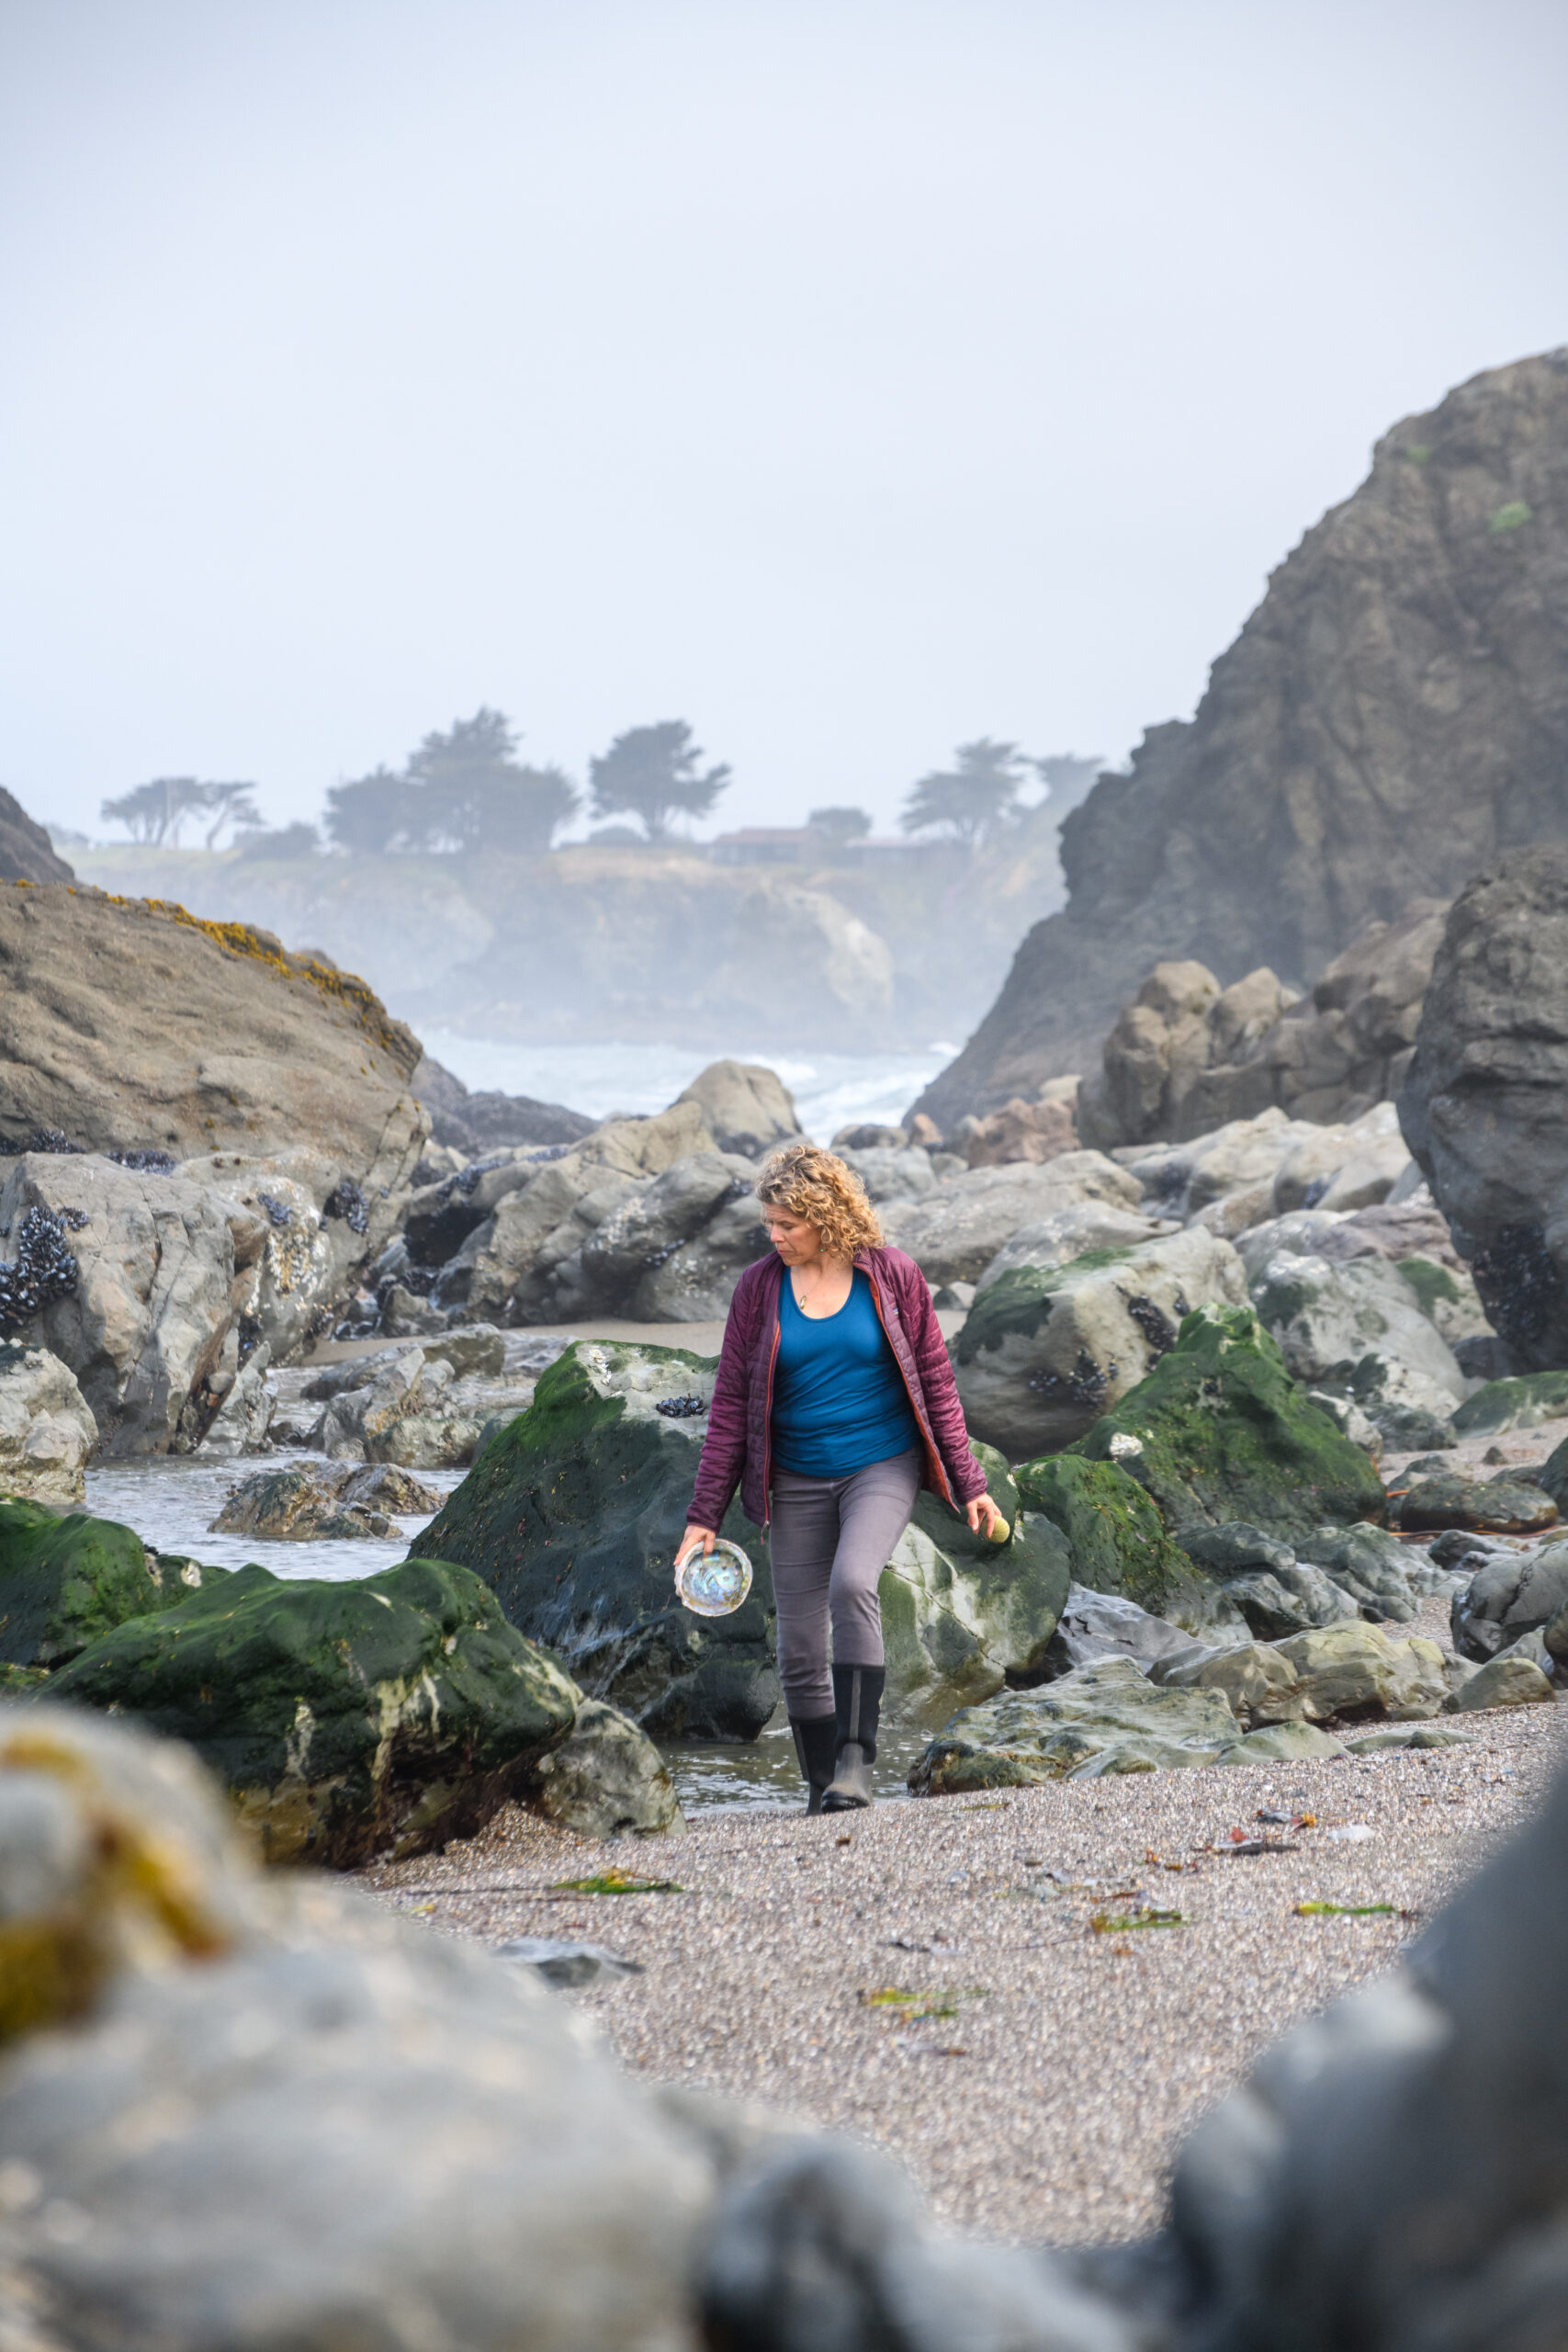 Marine educator Ellie Fairbairn finds her peace exploring along the coast. (Jerry Dodrill)